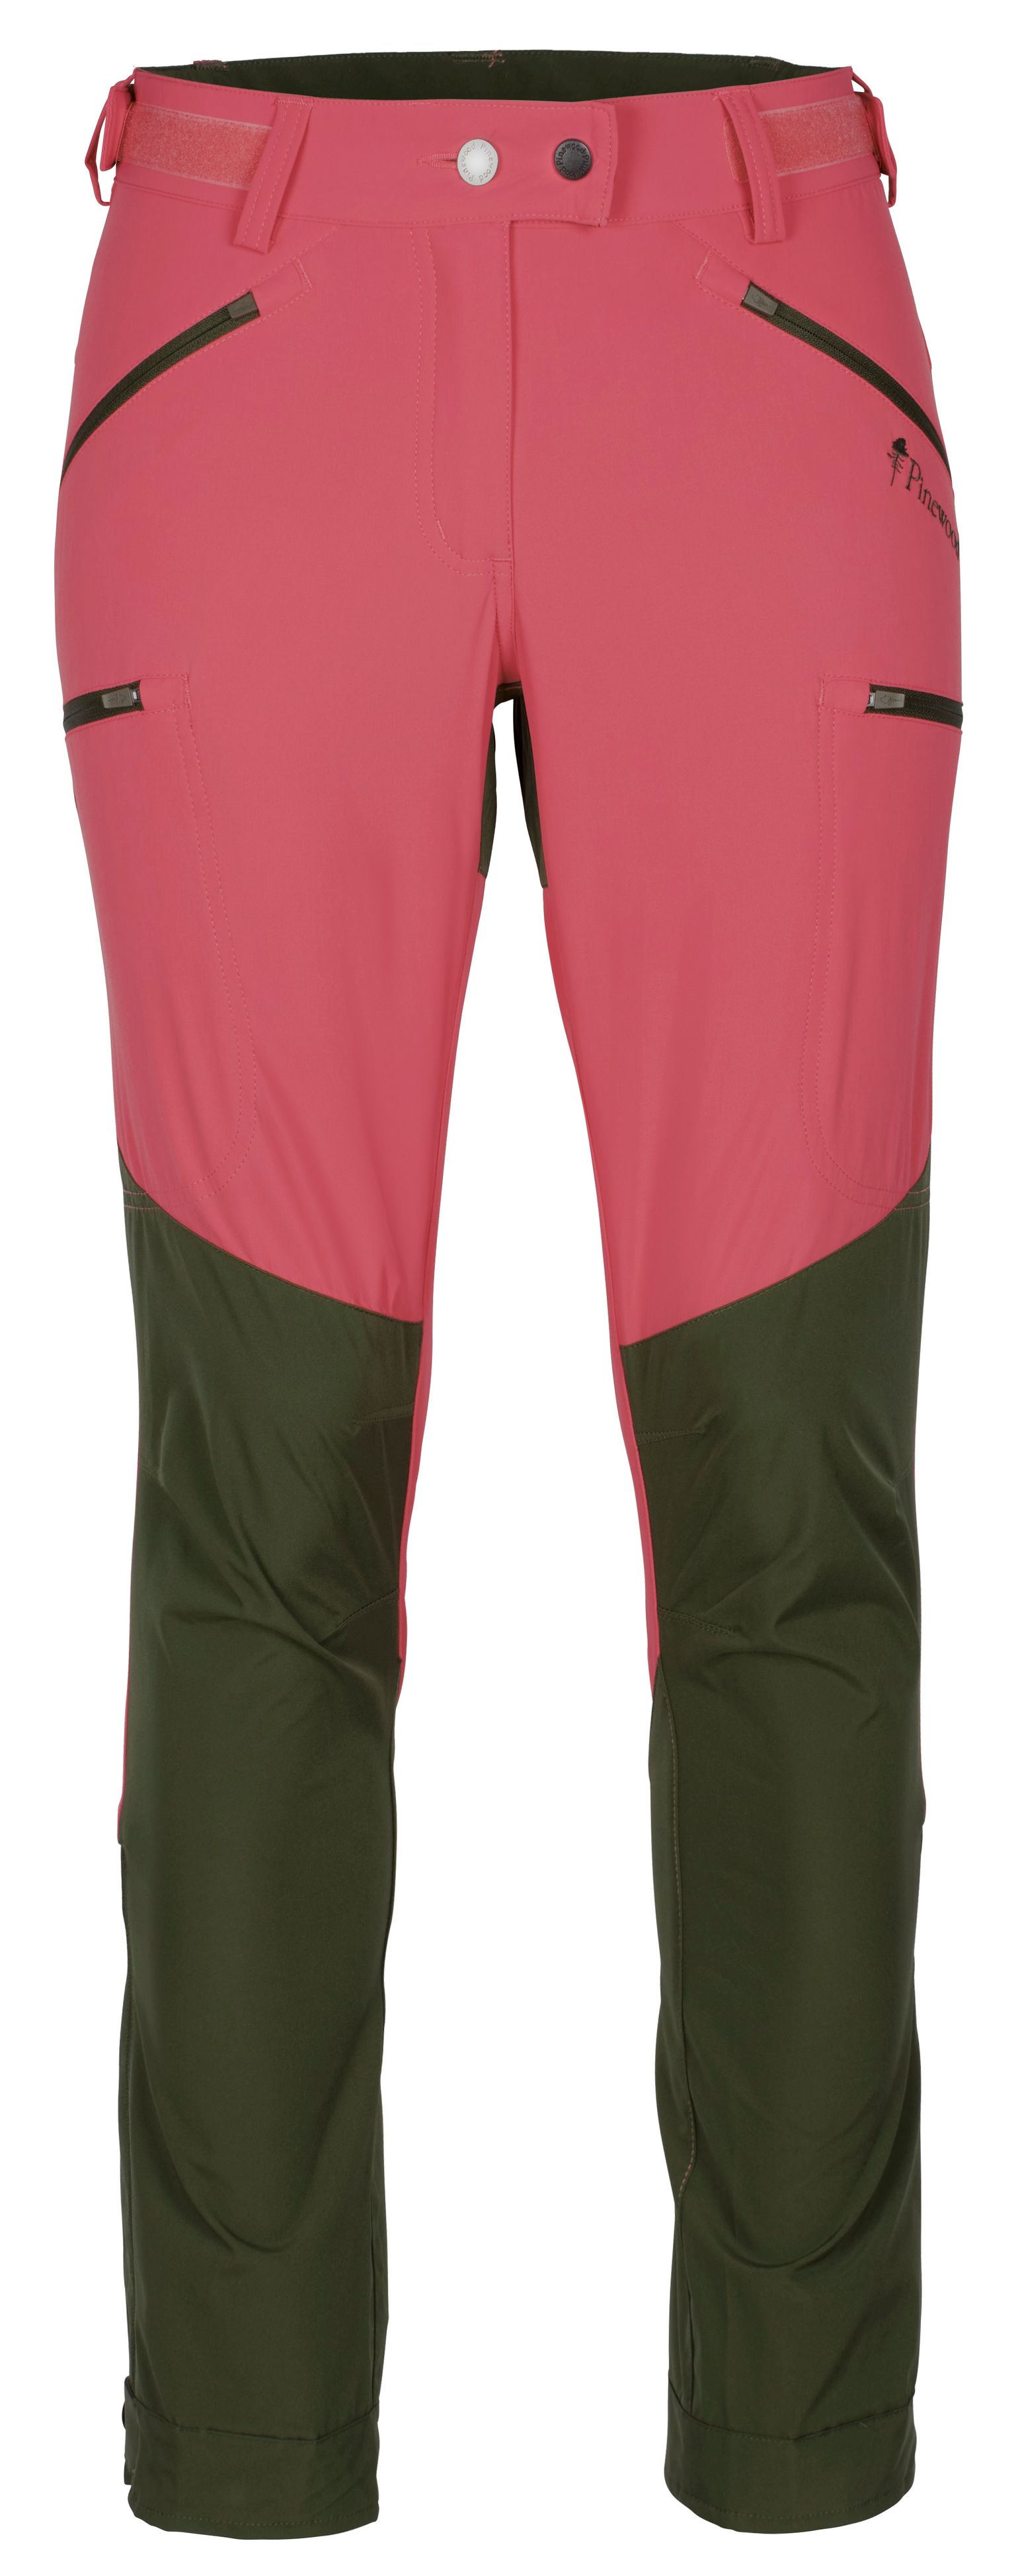 Pinewood Women's Abisko/Brenton Trousers Pink Blush/Mossgreen